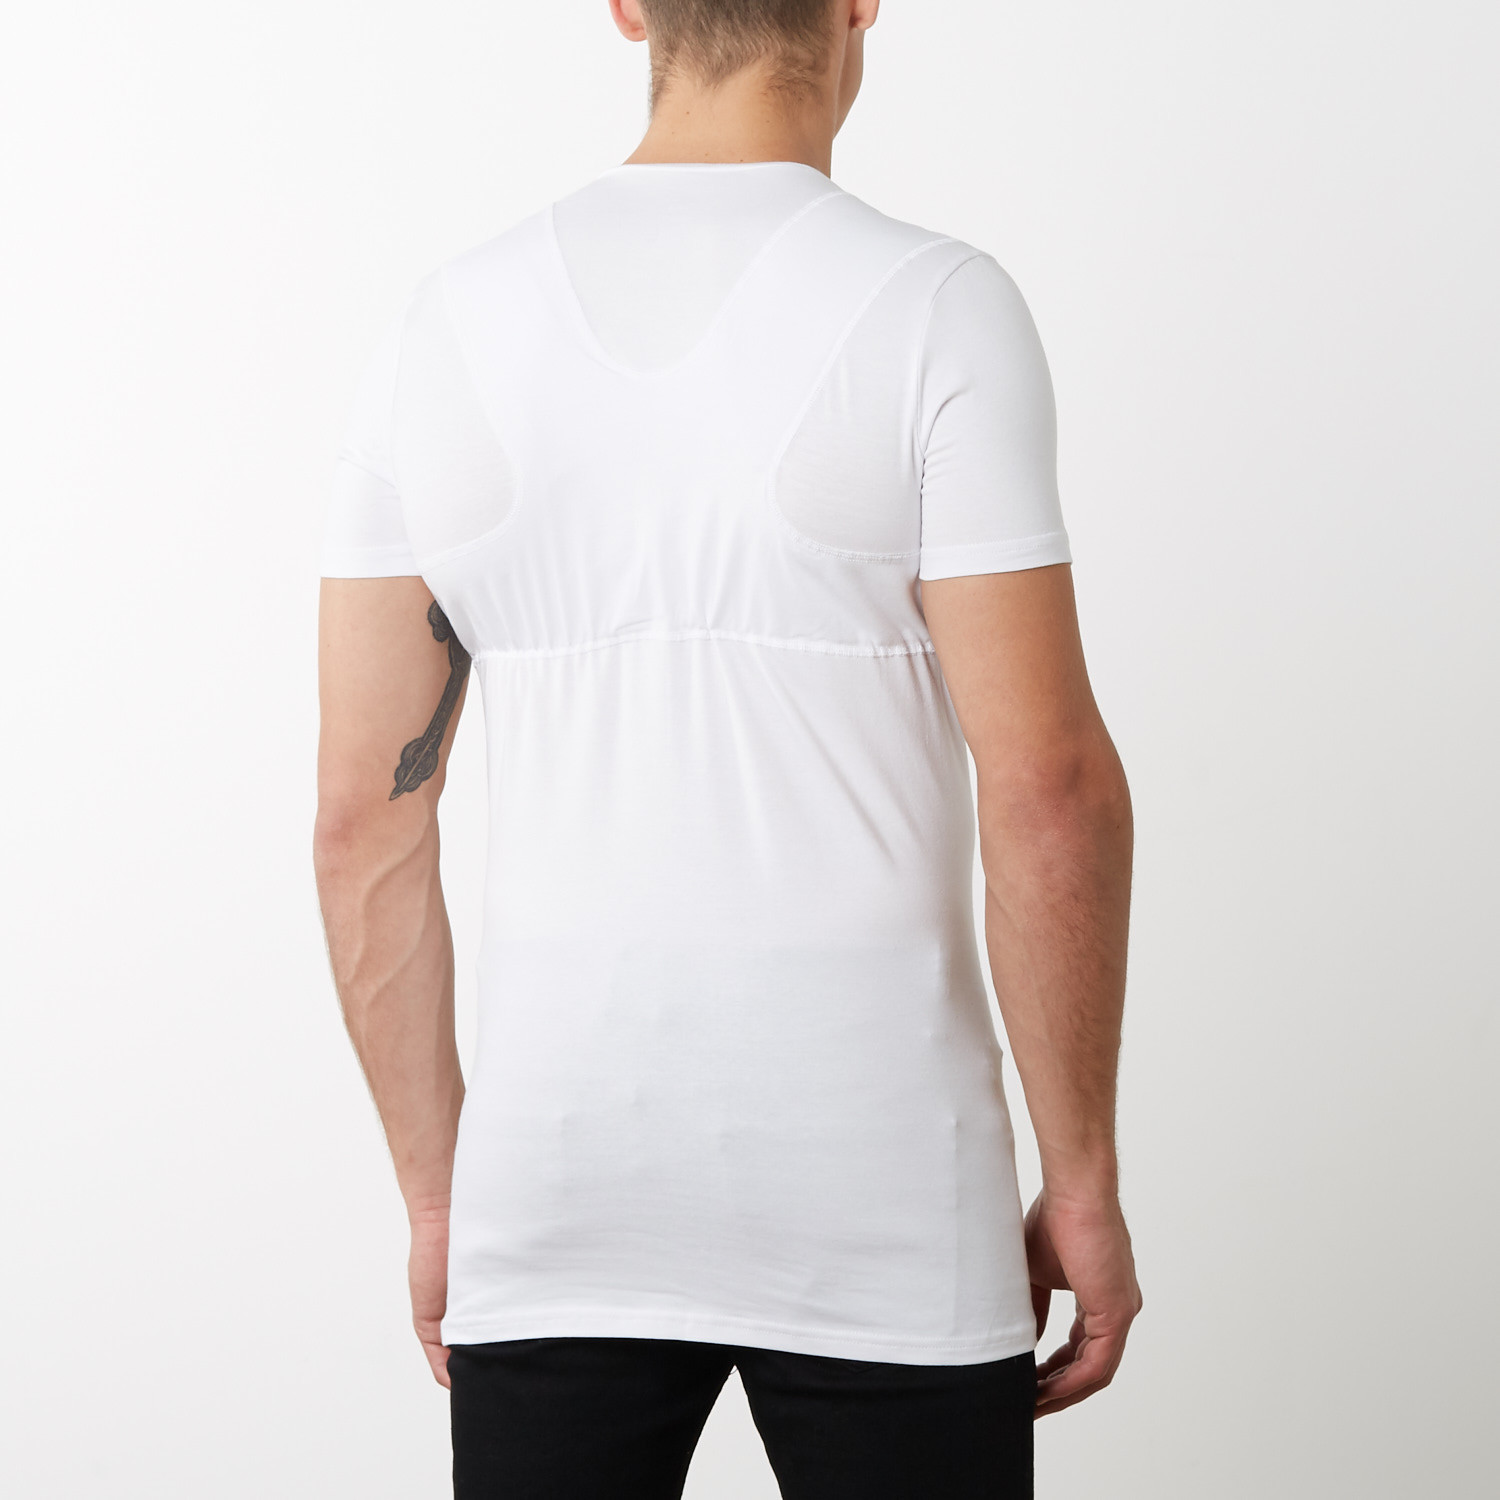 Posture Correction Shirt – Adrenalease Posture Apparel